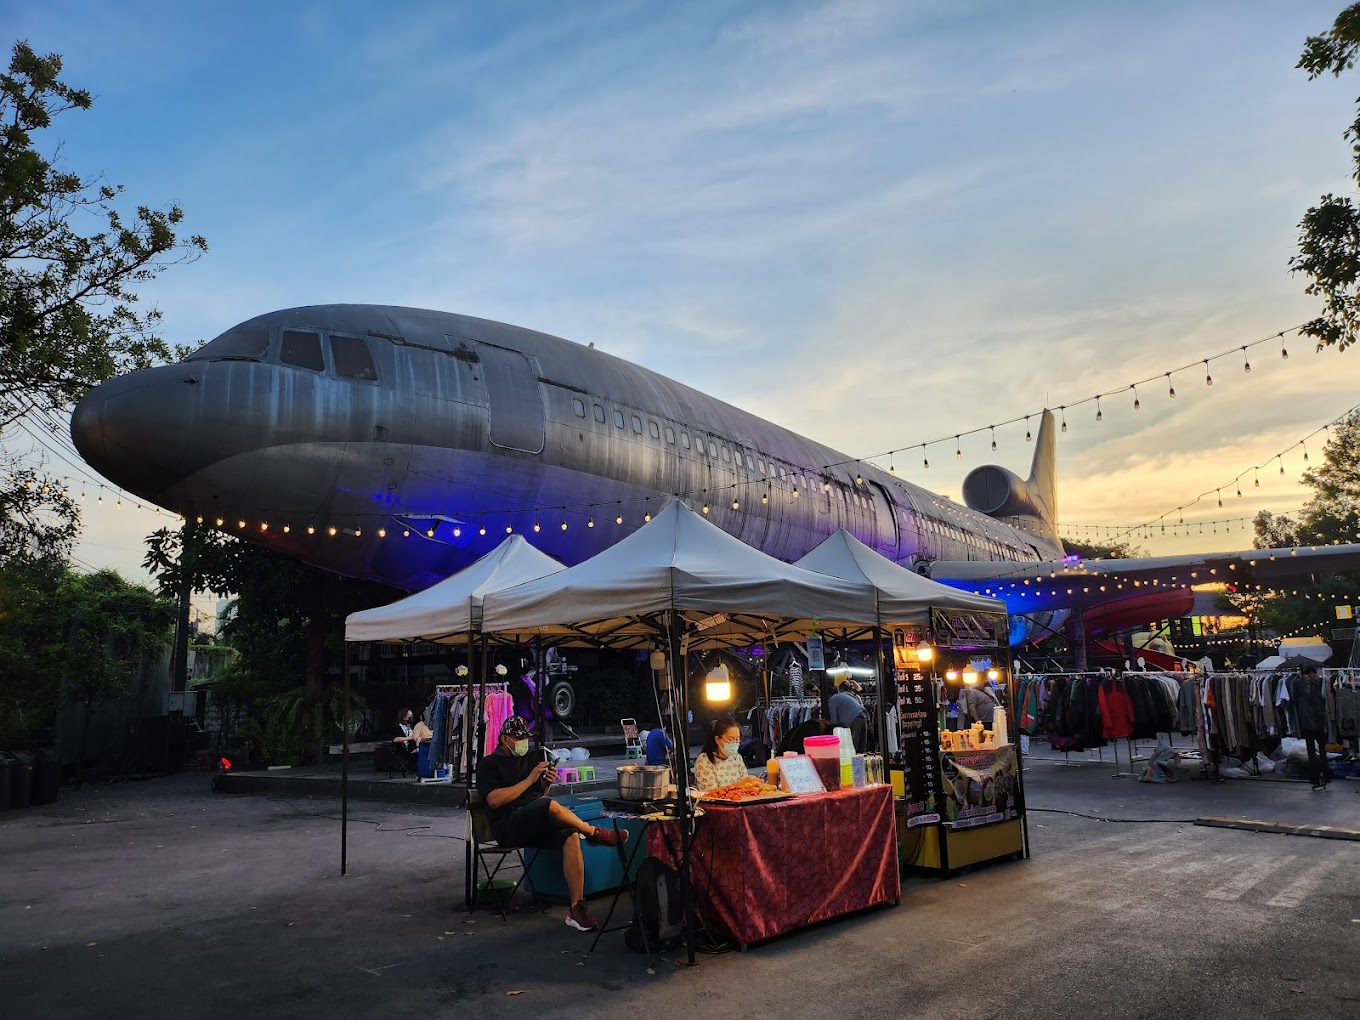 Things to do in Bangkok - Chang Chui Plane Market